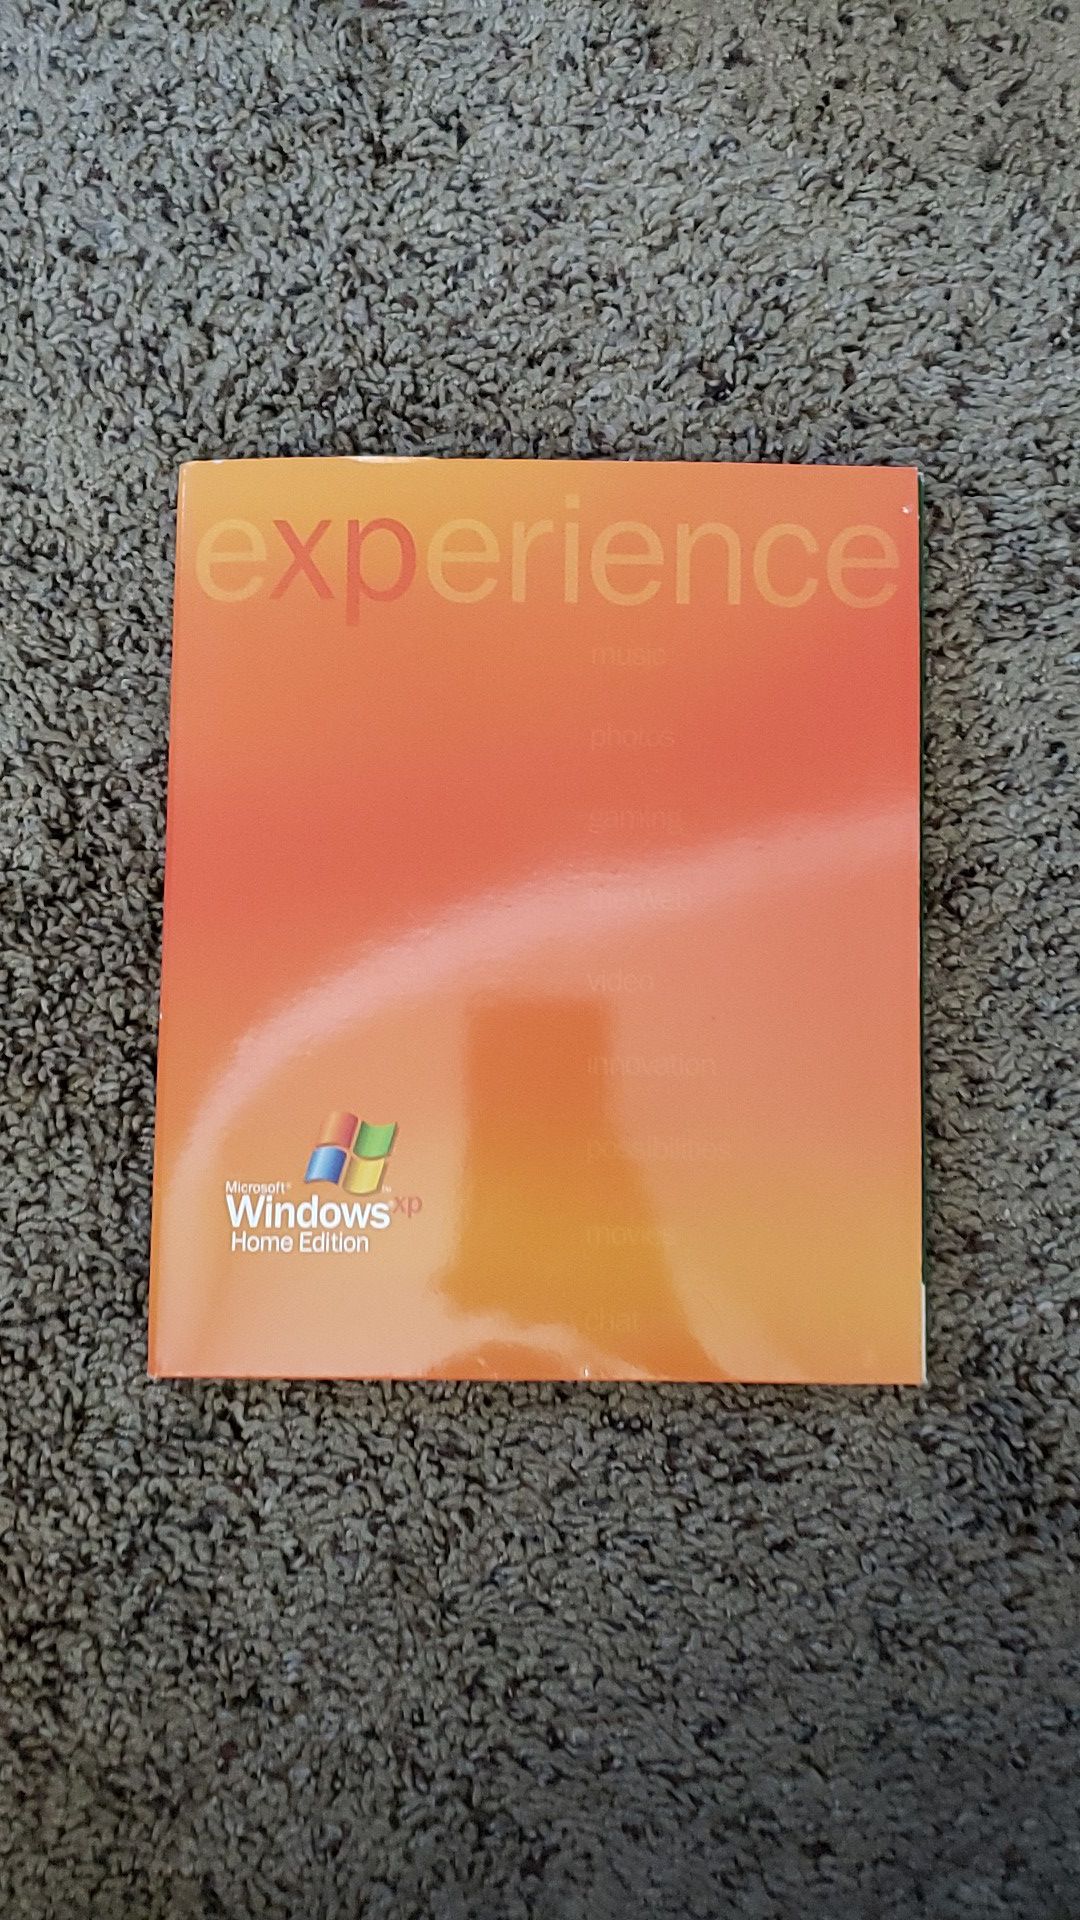 Windows XP version 2012